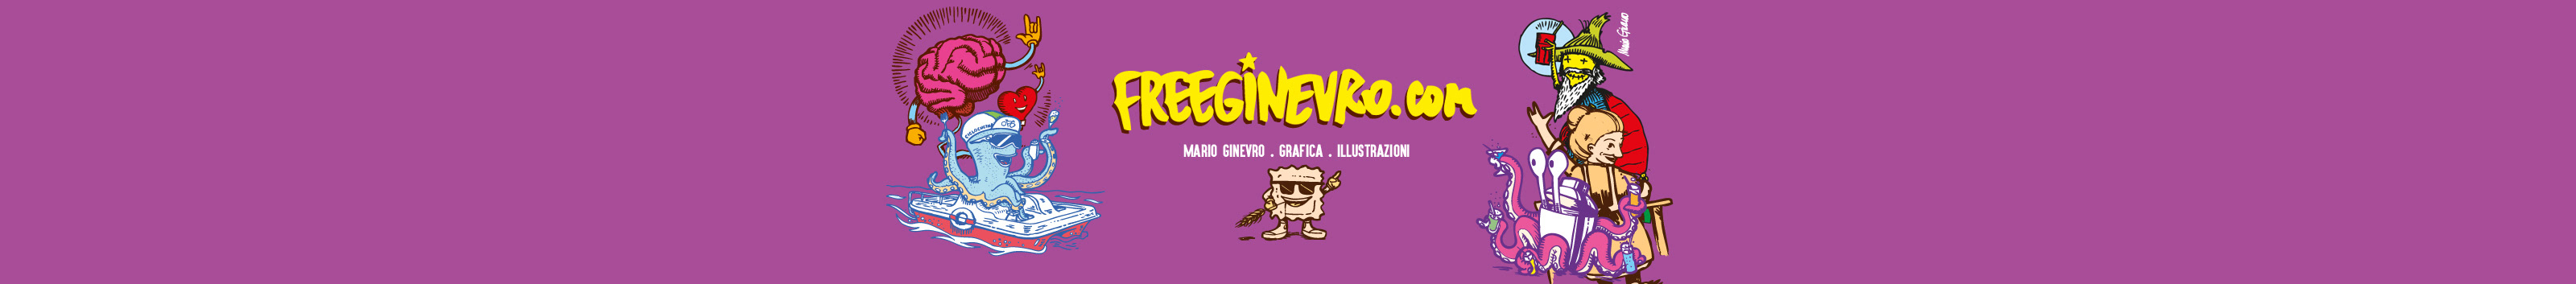 Freeginevro .com's profile banner